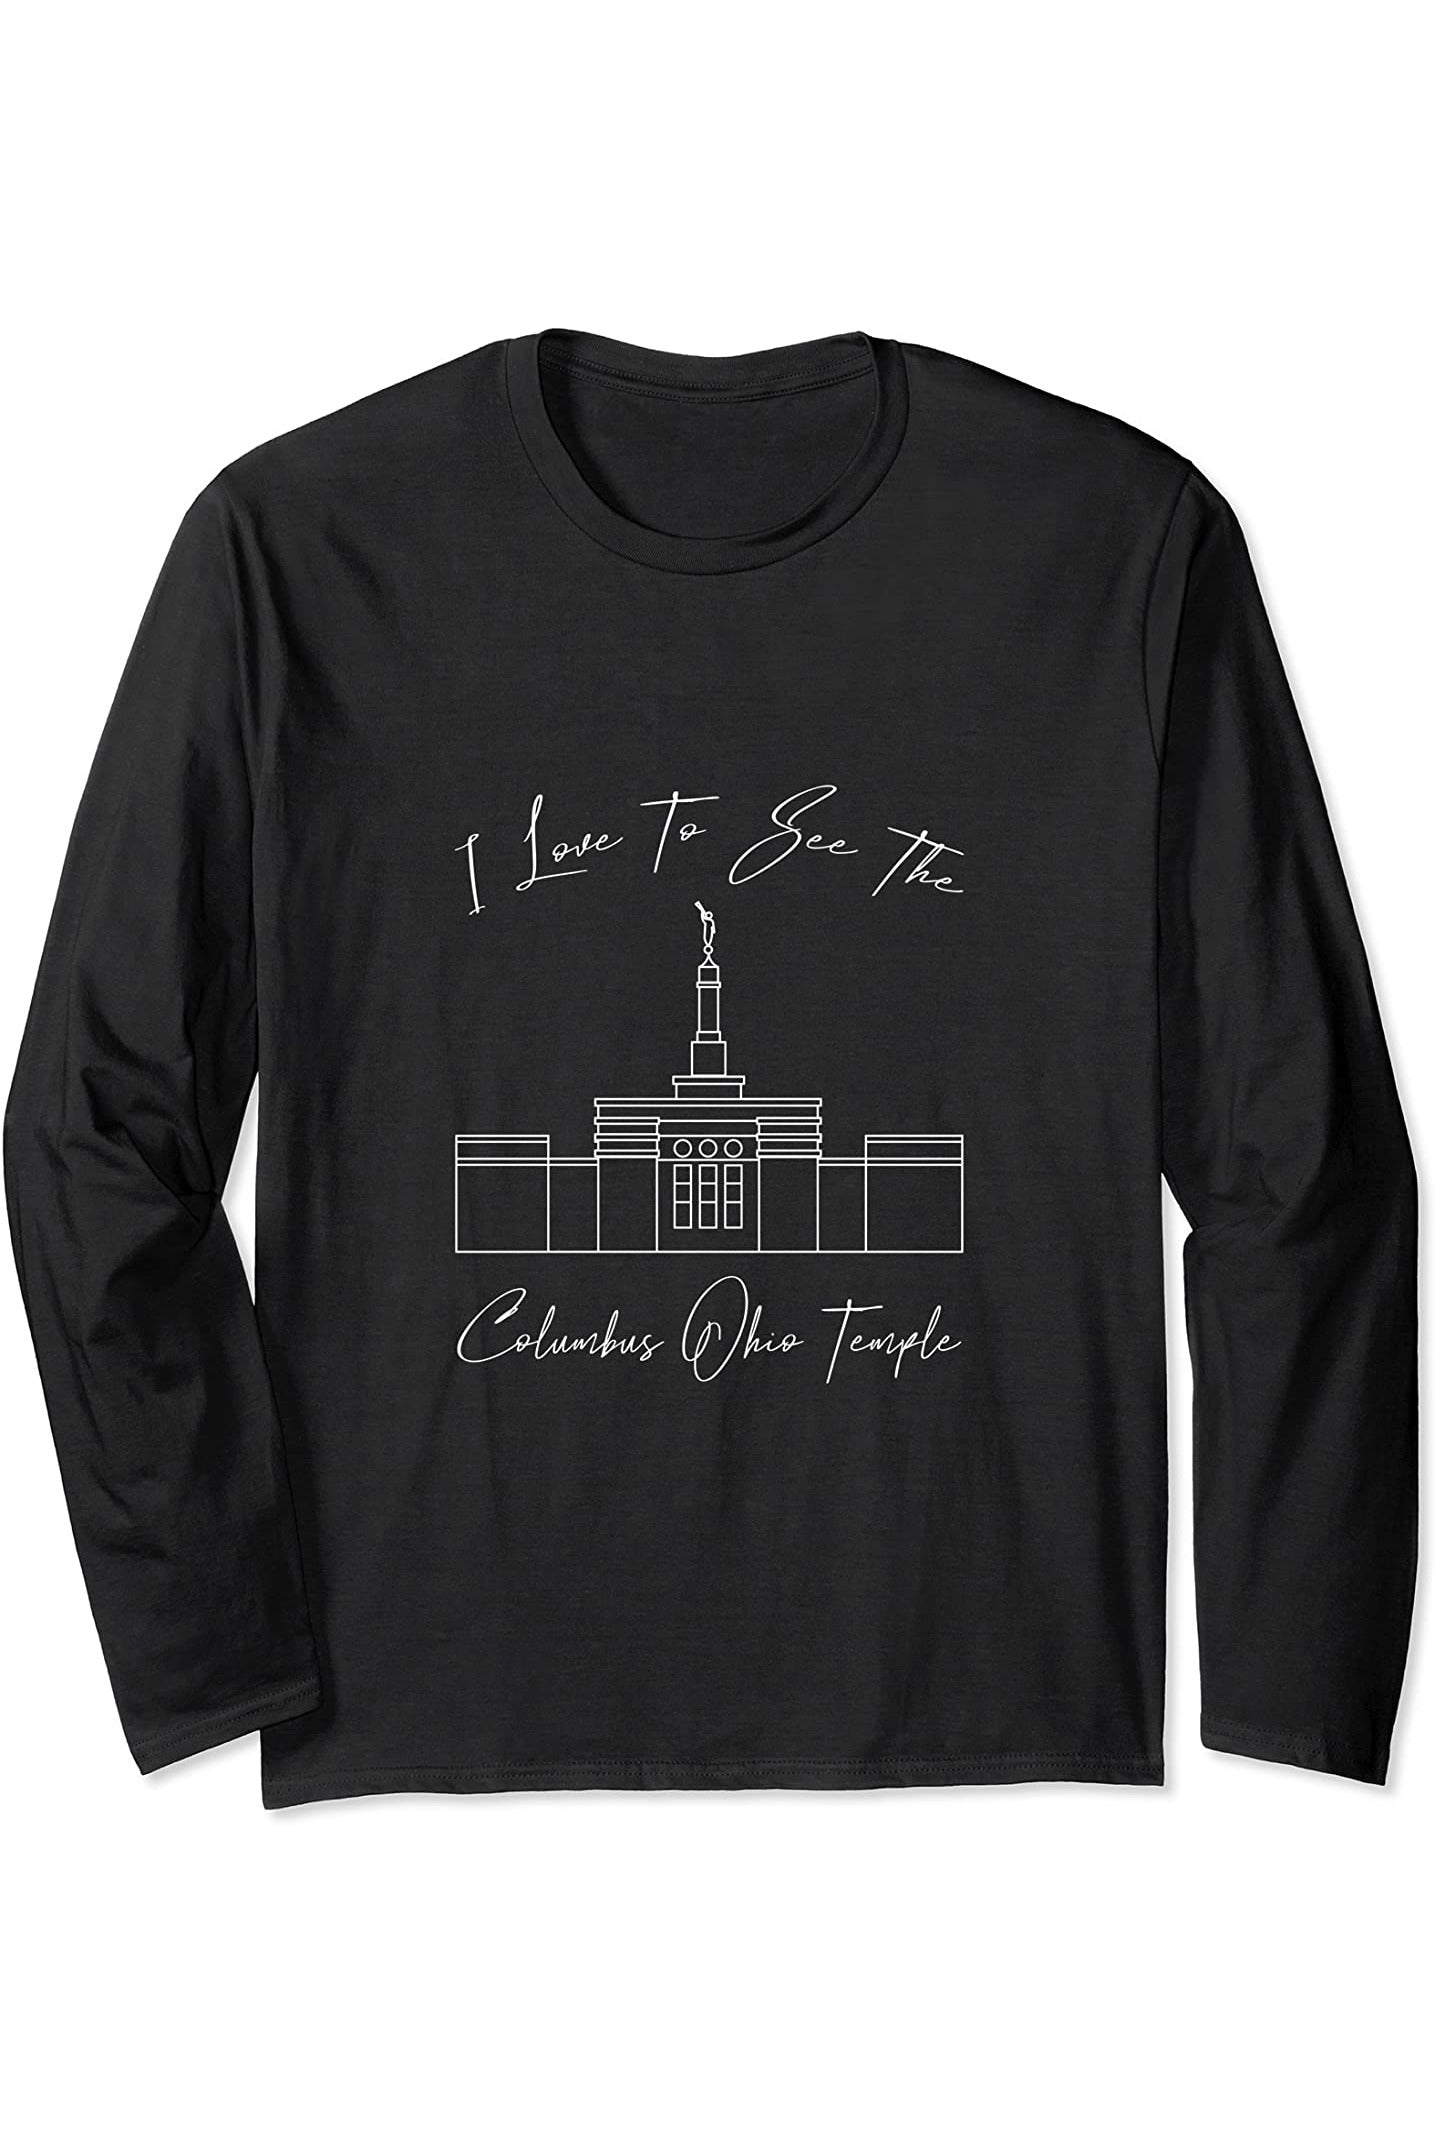 Columbus Ohio Temple Long Sleeve T-Shirt - Calligraphy Style (English) US